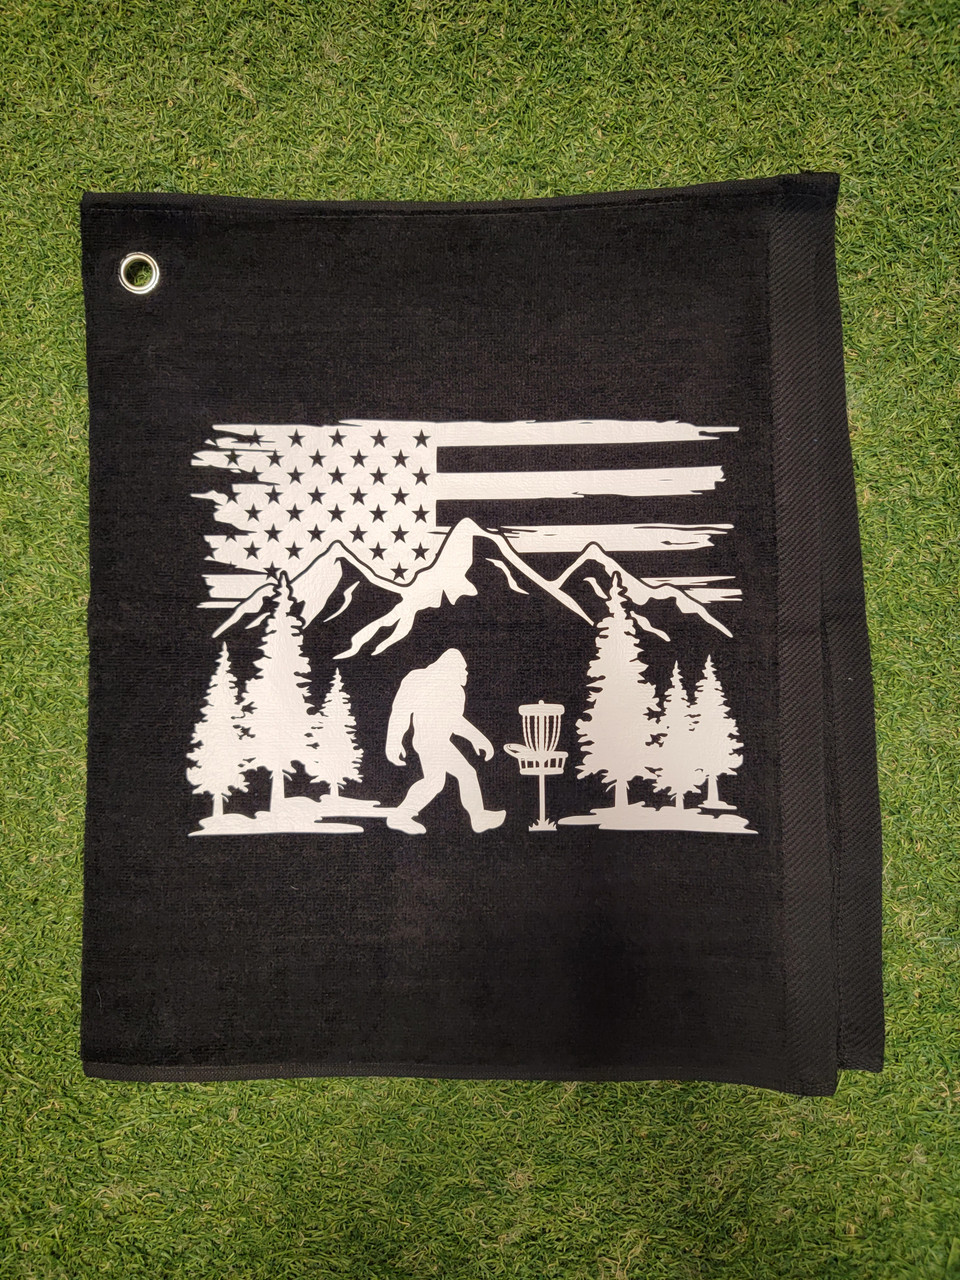 Carbella Designs Towel Sasquatch Flag White on Black